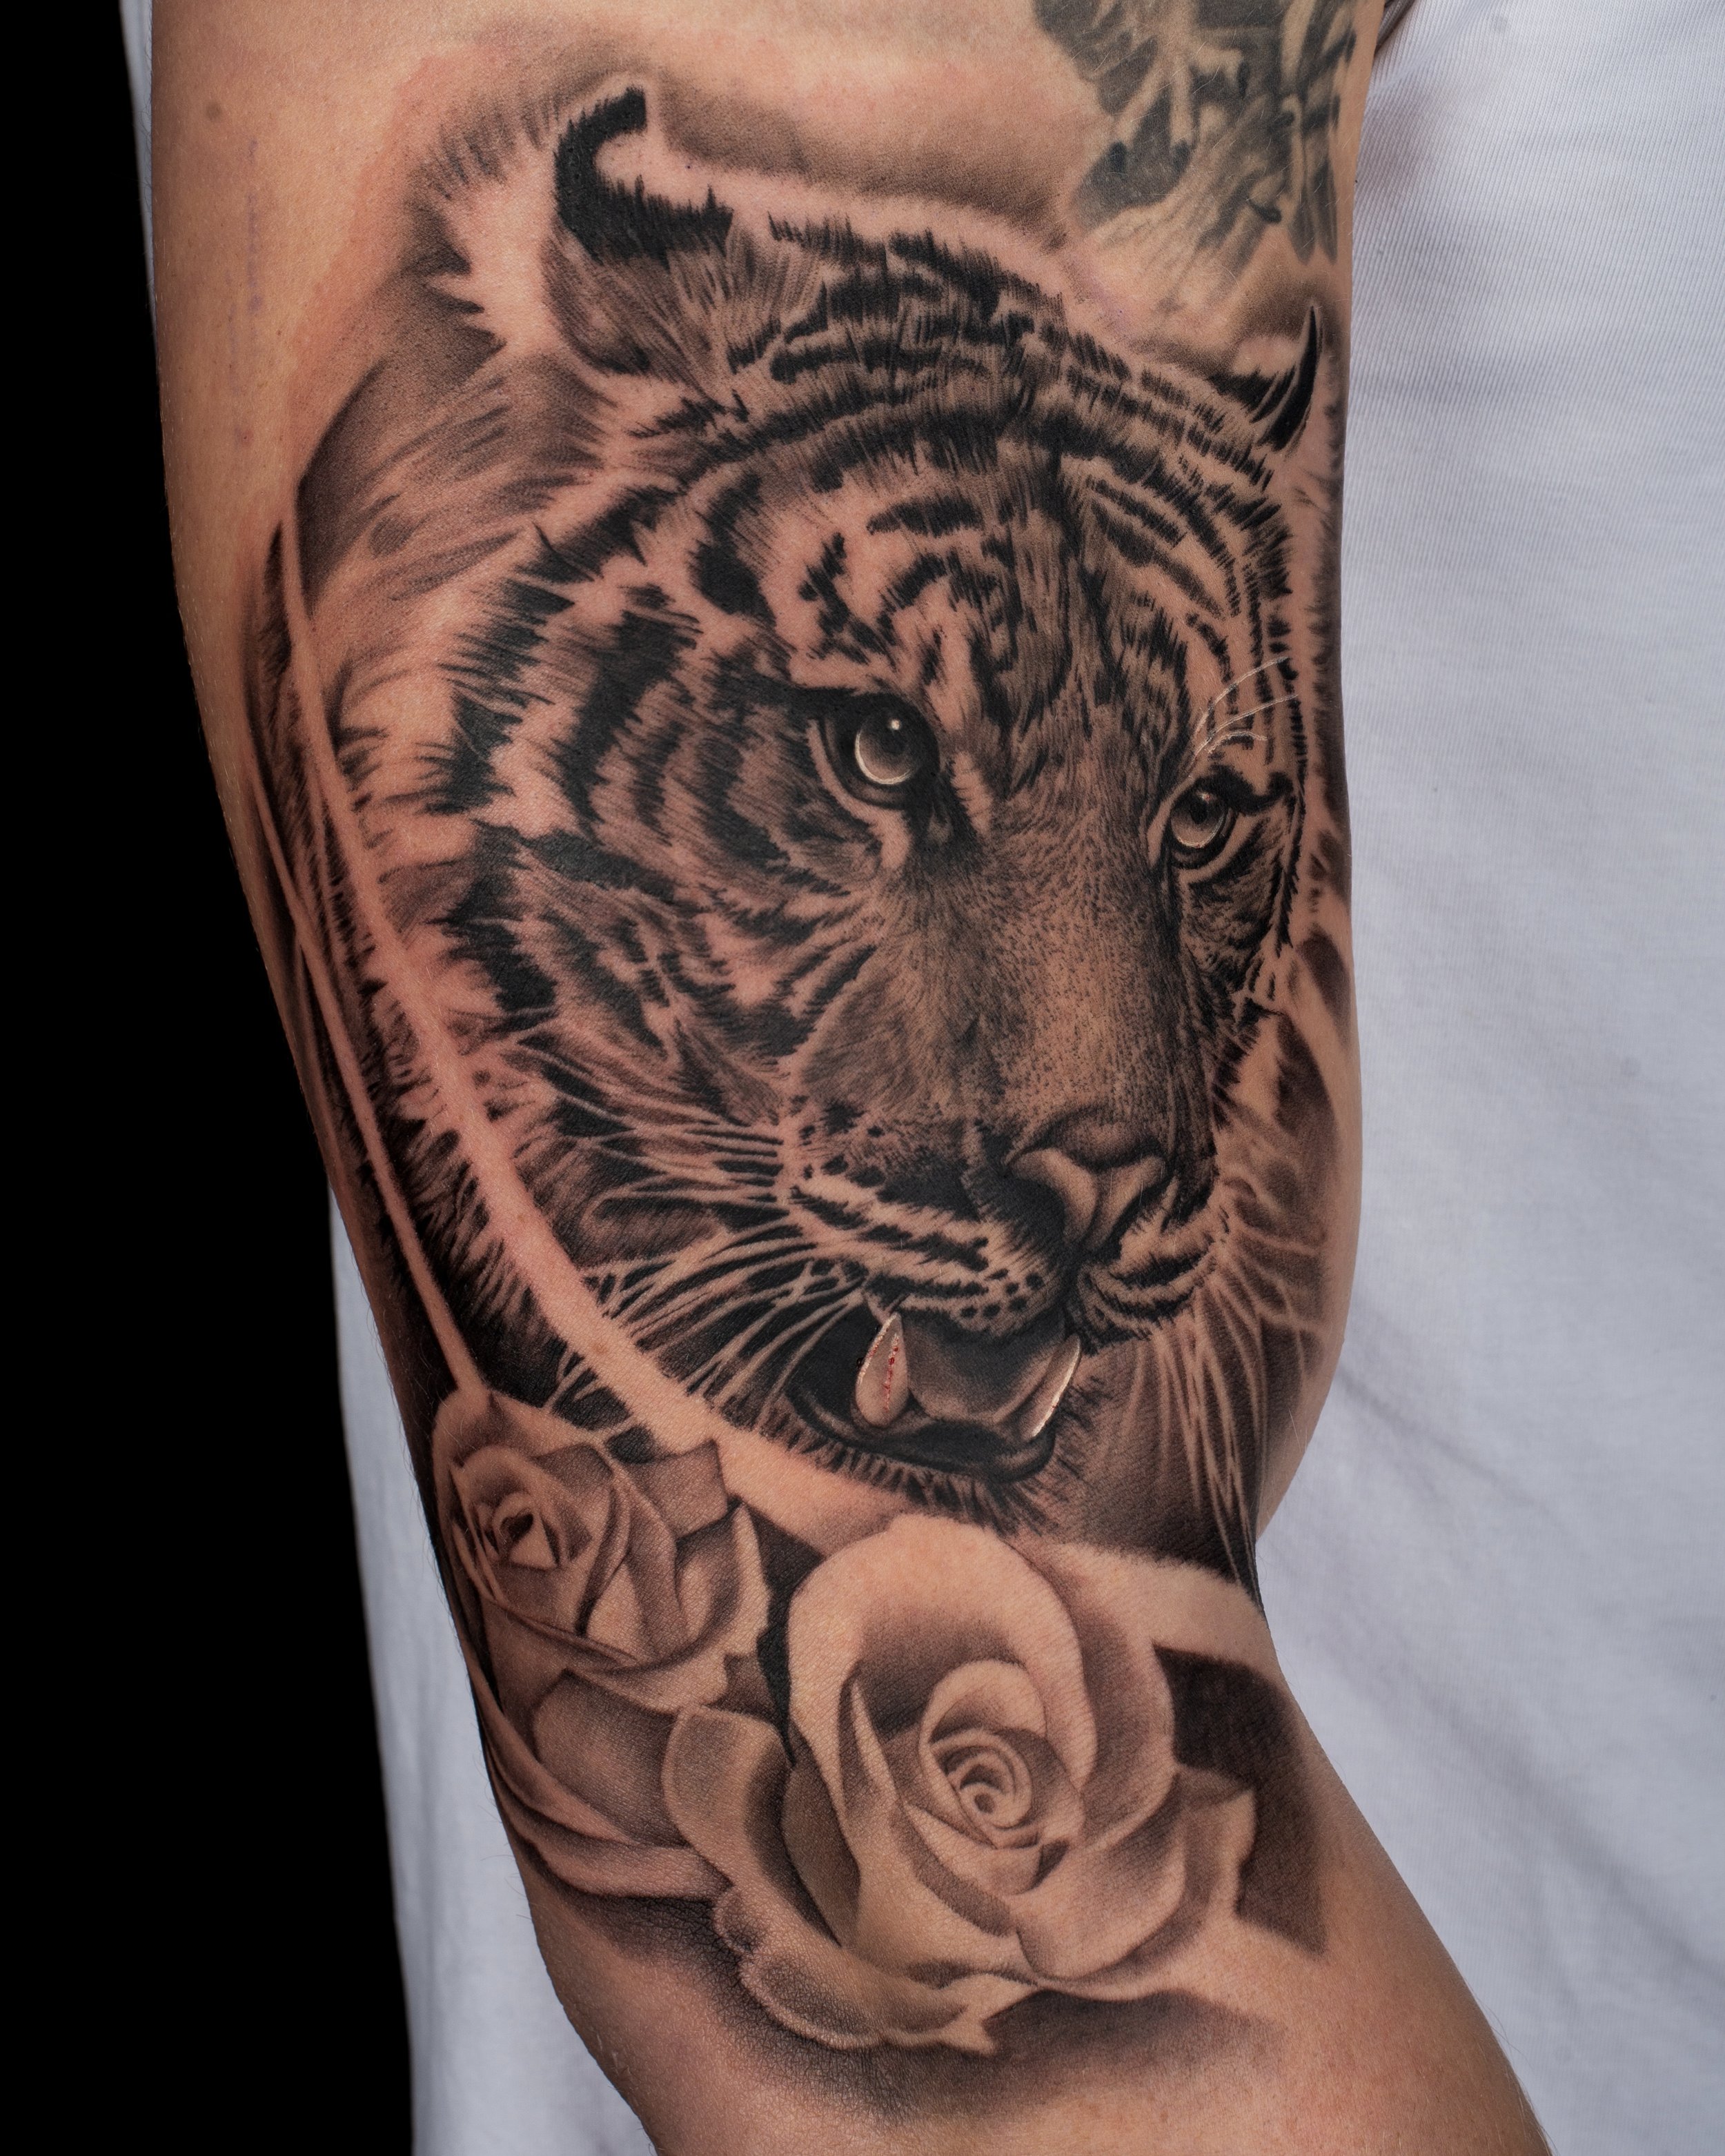 15 Best Tiger and Rose Tattoo Designs  PetPress